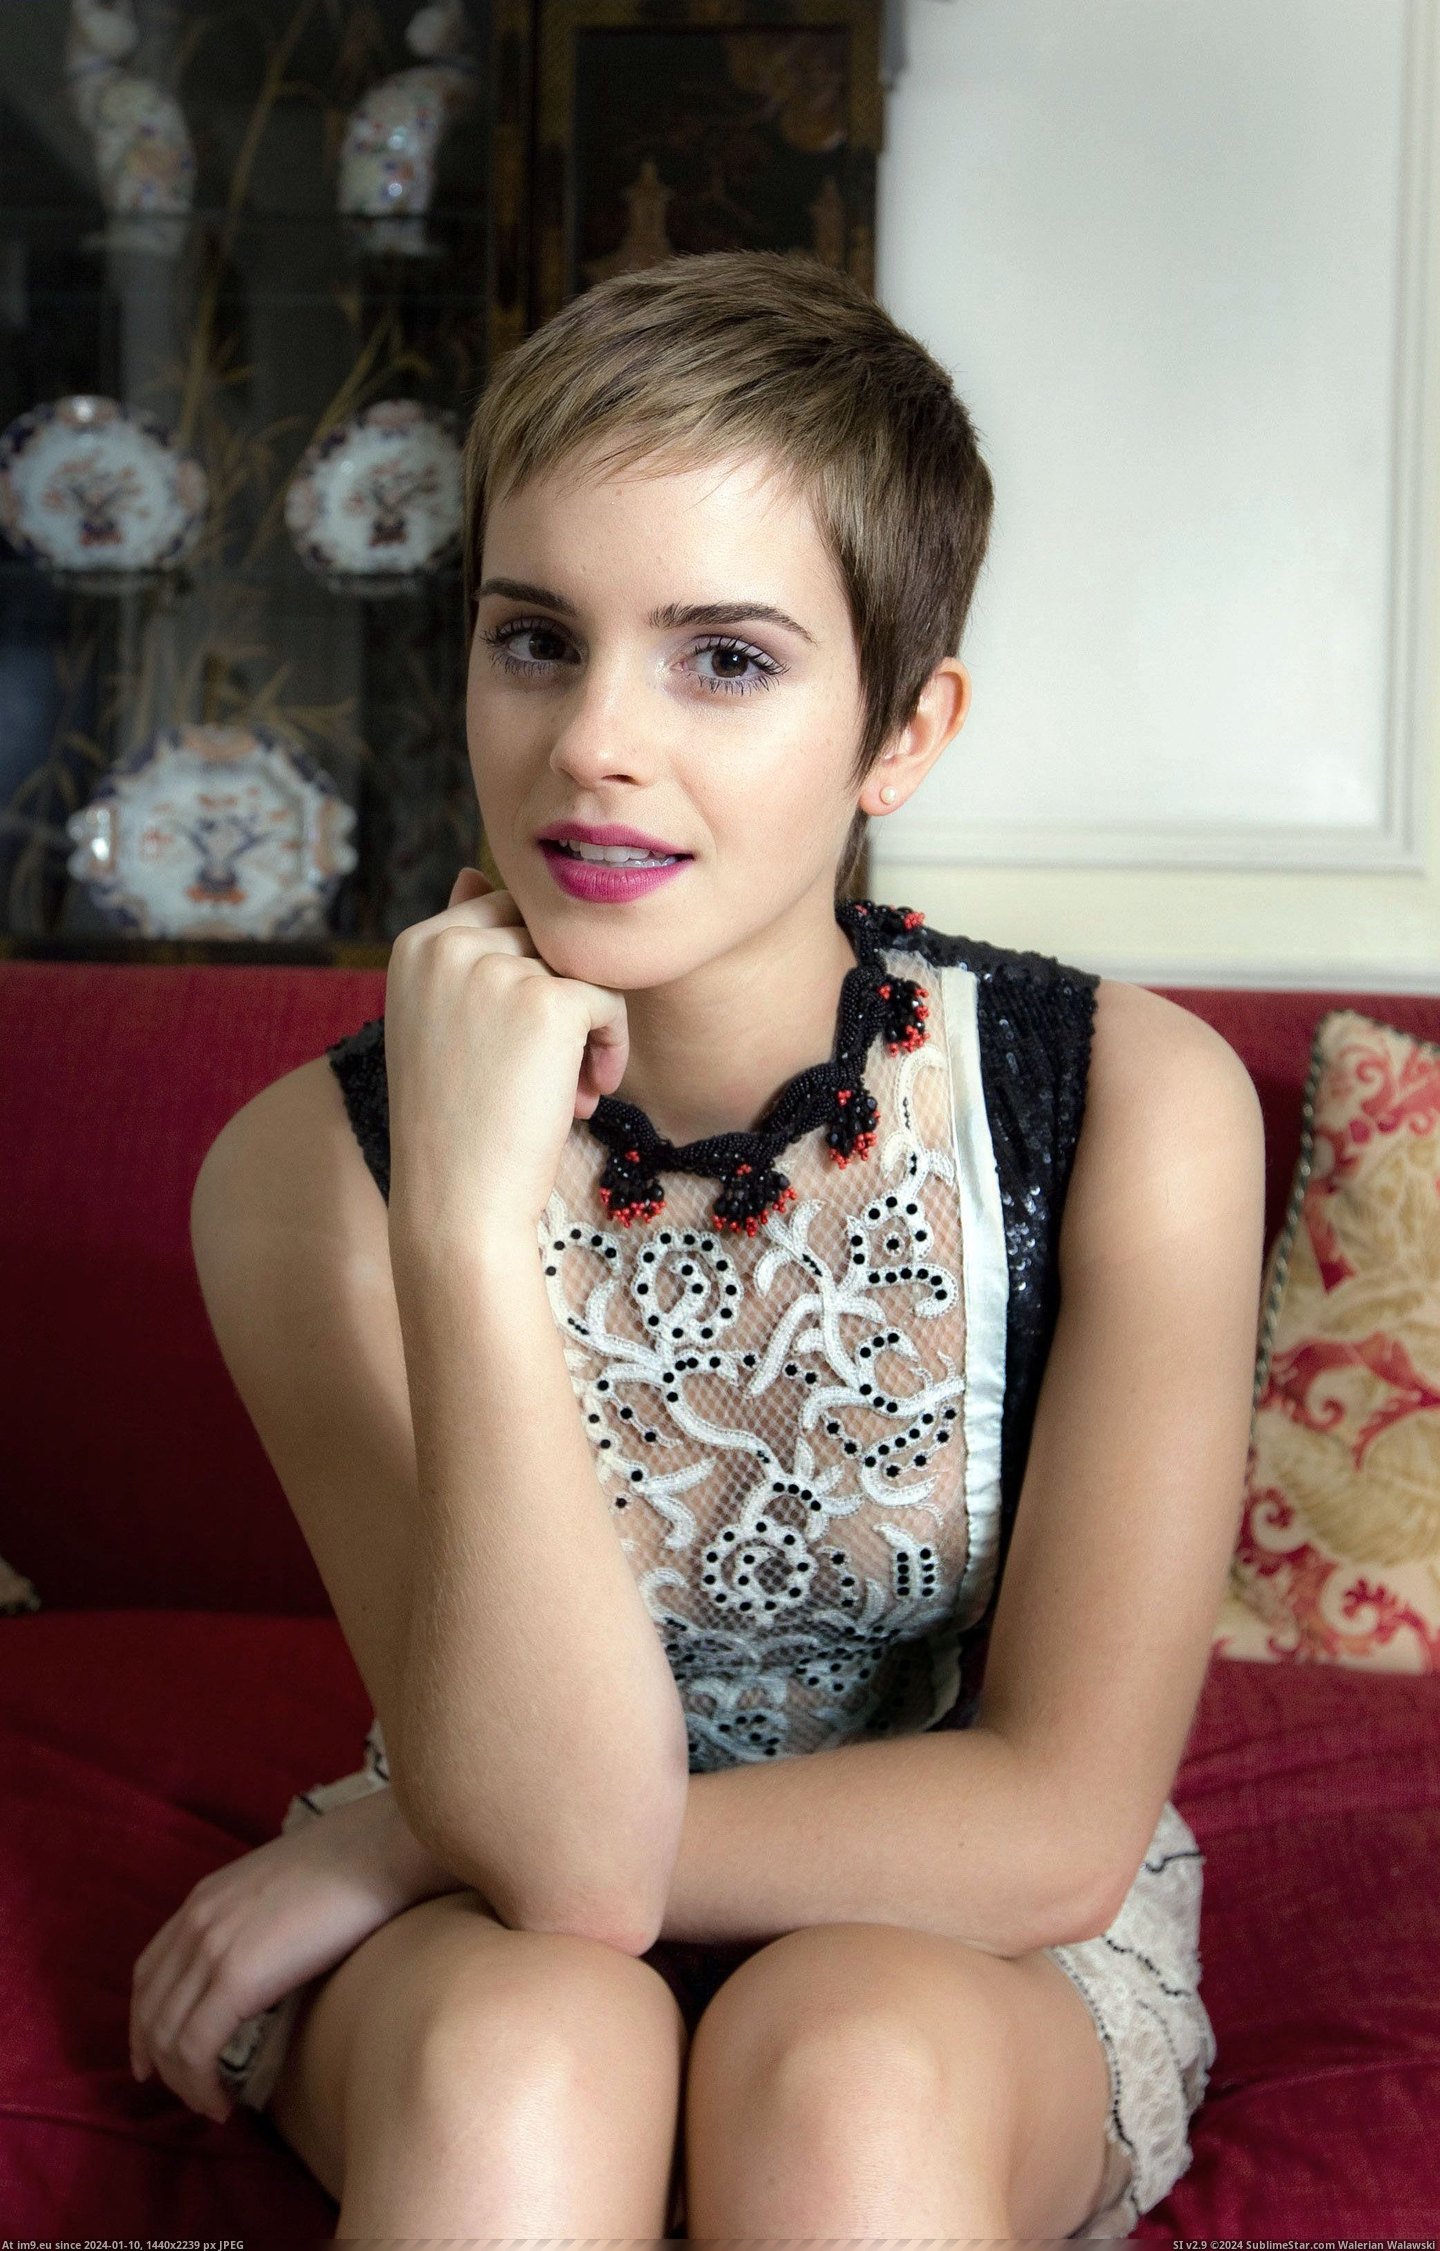 #Photo #Emma #Nip #Owgjxj2 #Watson #Slip Emma Watson Nip Slip Owgjxj2 (emma photo) Pic. (Obraz z album Emma Watson Photos))